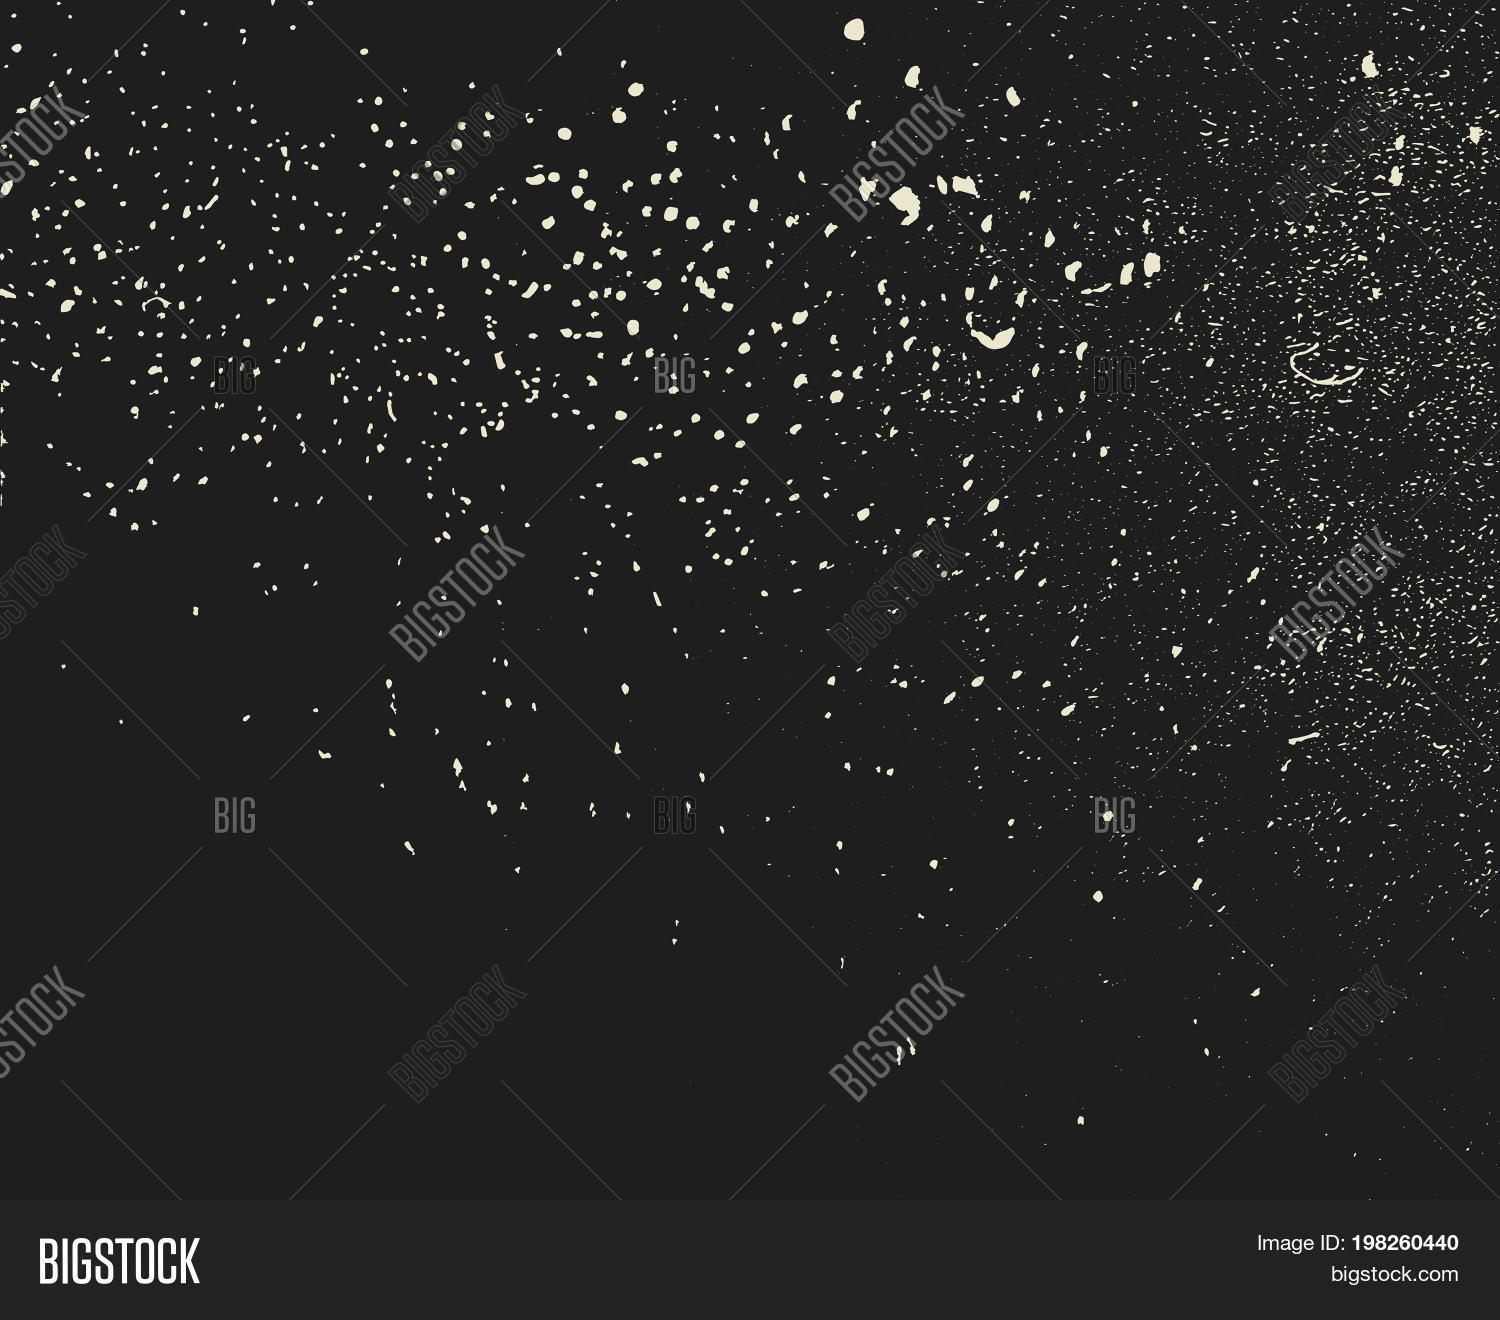 Grunge Monochrome Dust Scratches Image & Photo | Bigstock